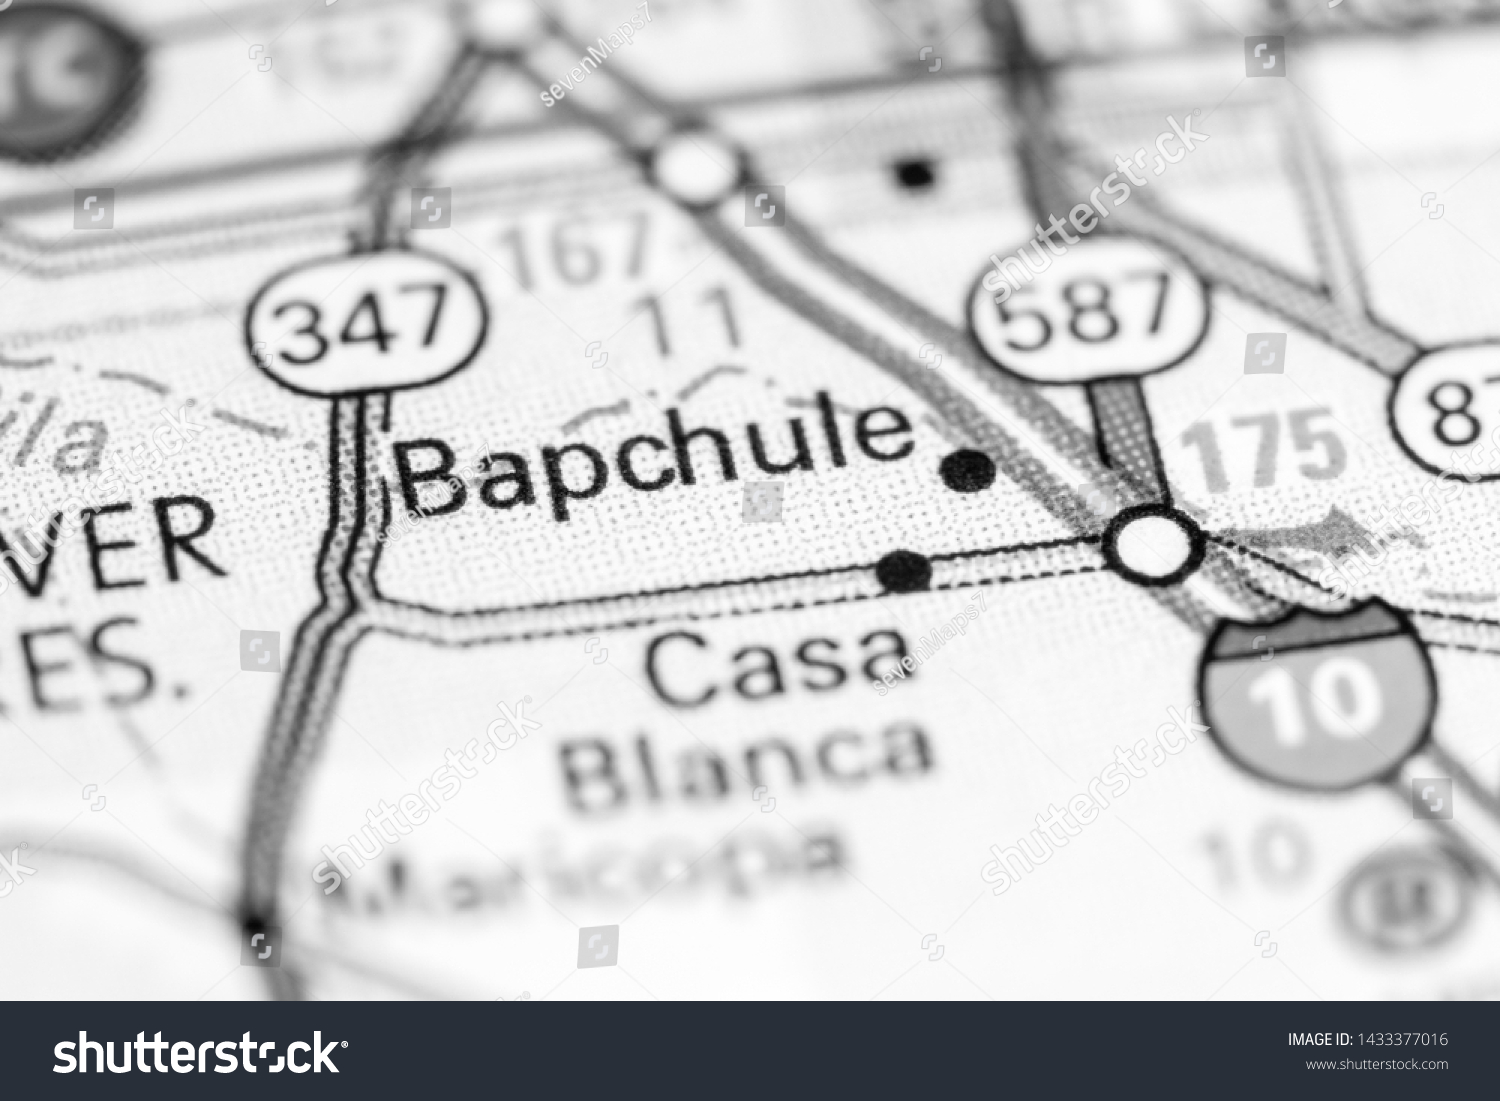 Stock Photo Bapchule Arizona Usa On A Map 1433377016 